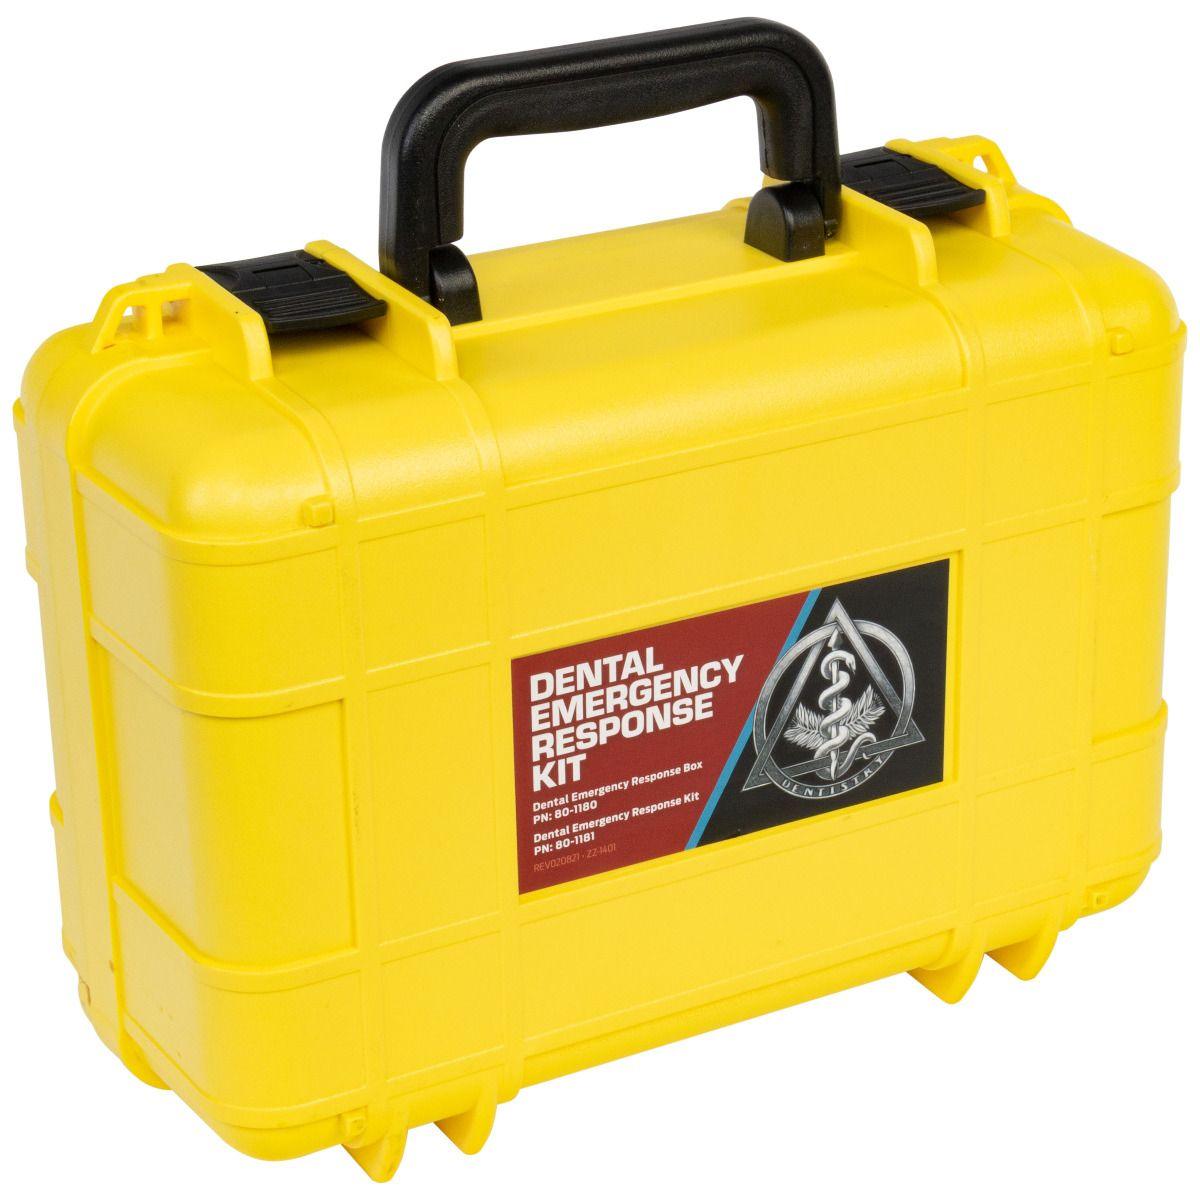 Dental Emergency Response kit - Vendor